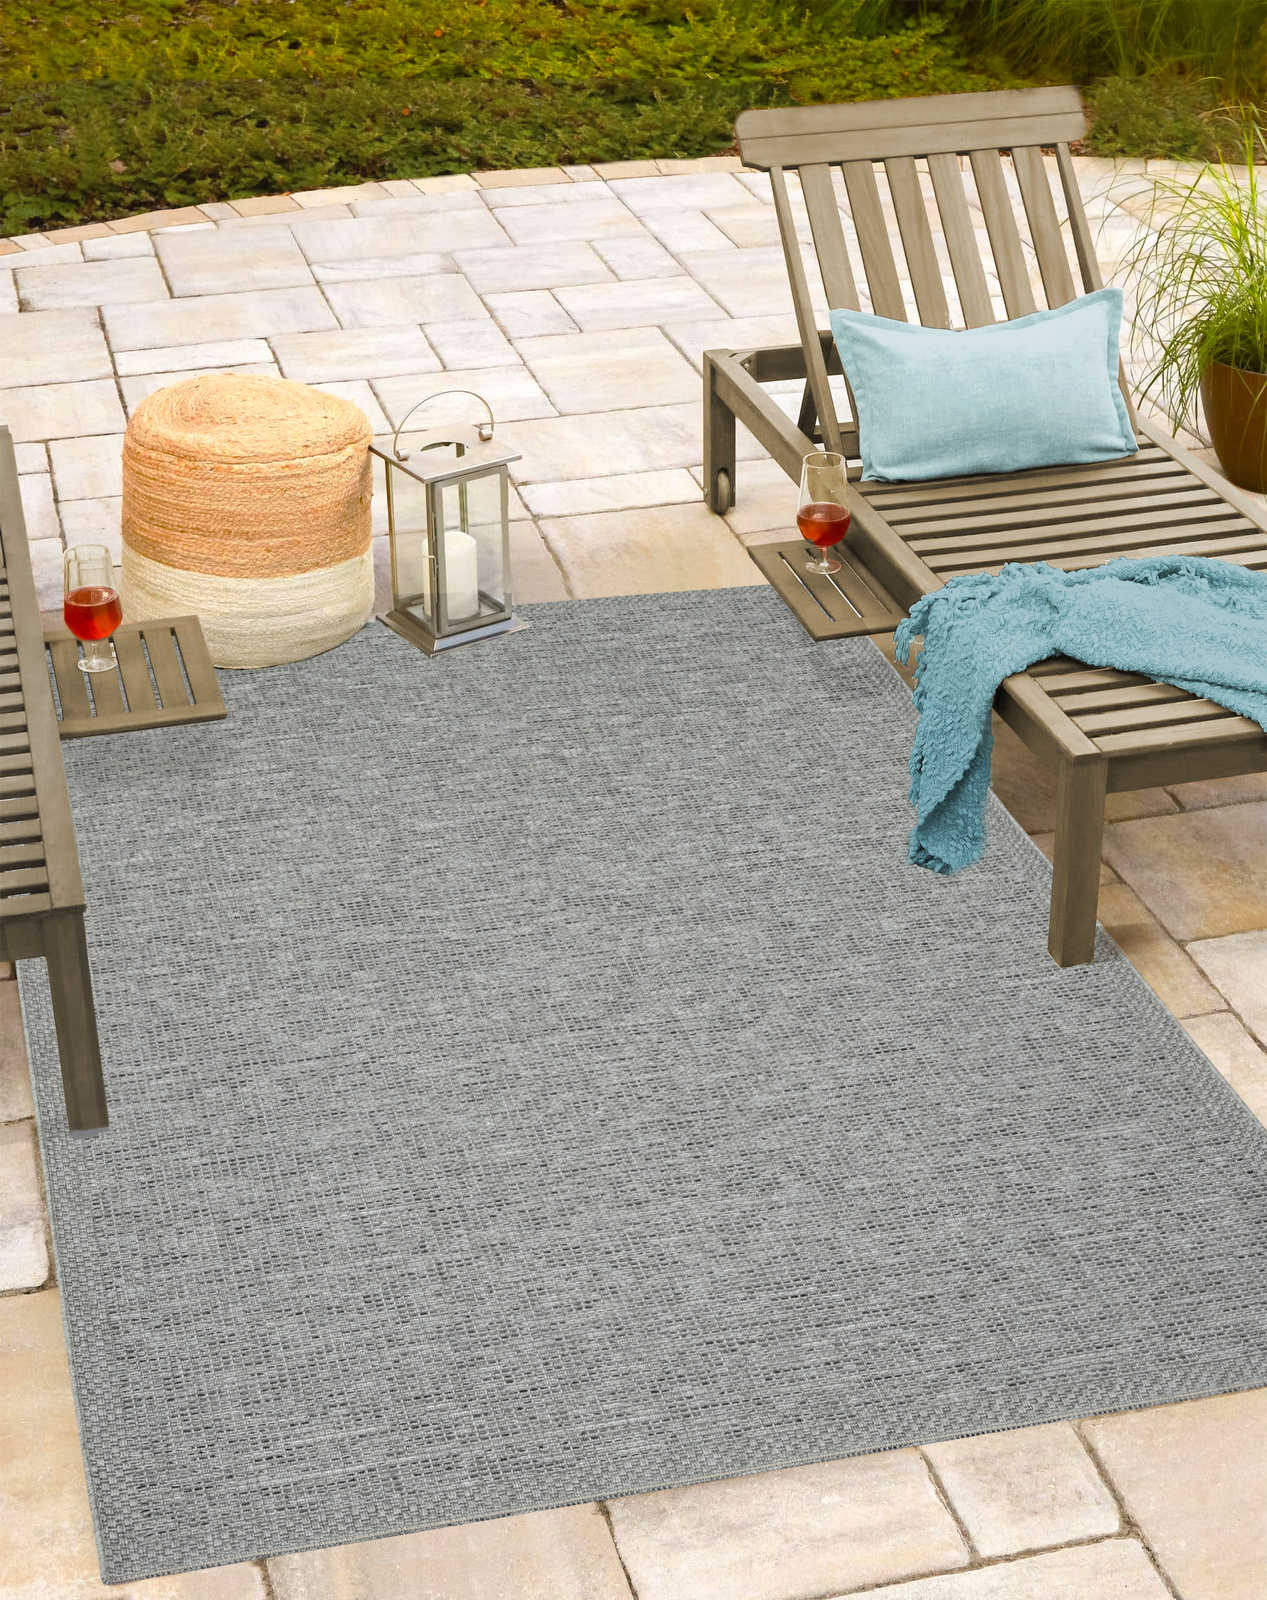 Plain Outdoor Carpet in Grey as Runner - 180 x 67 cm
